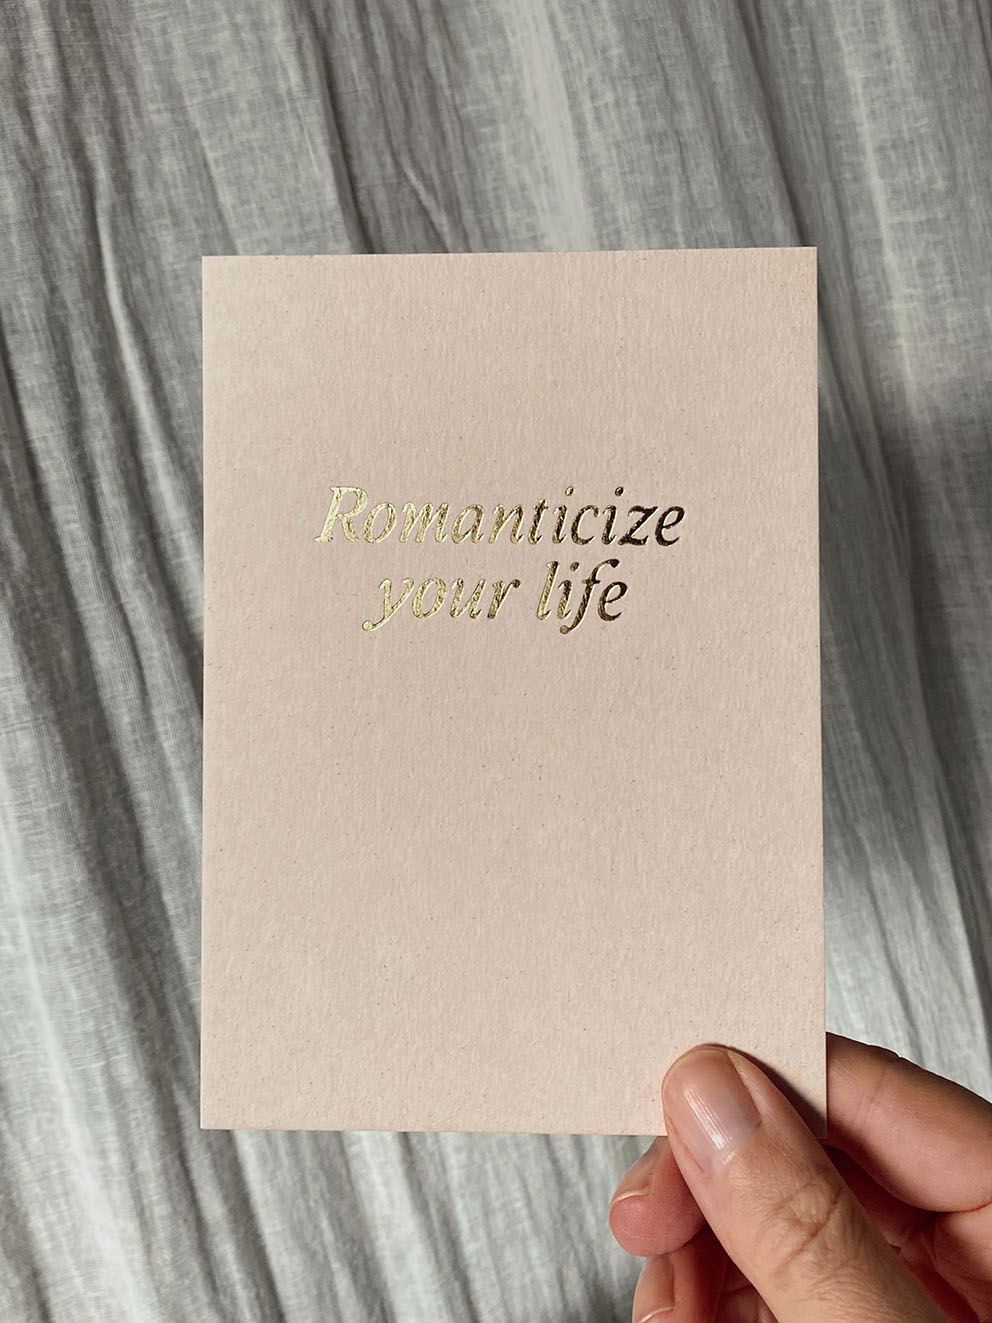 Romanticize Your Life Postkort